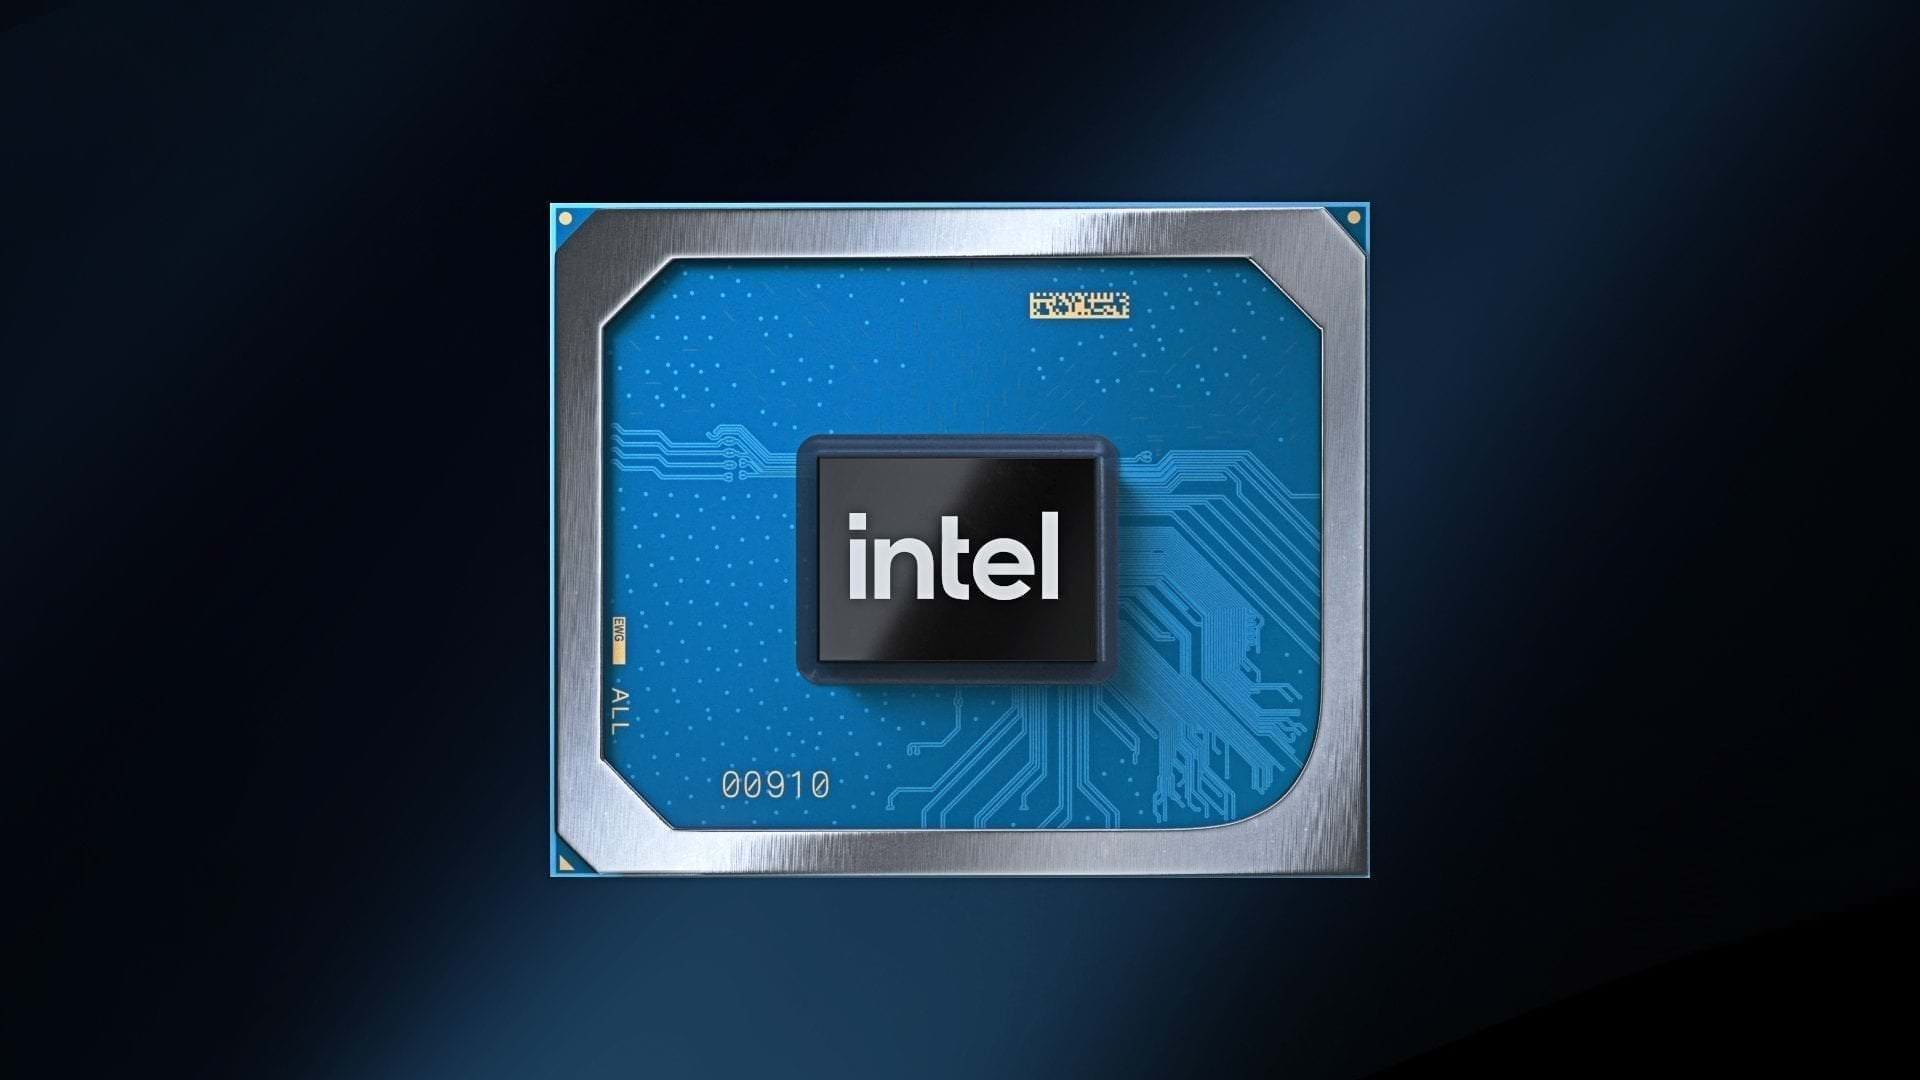 Intel Iris Xe Max vga modartpc - ModArt PC